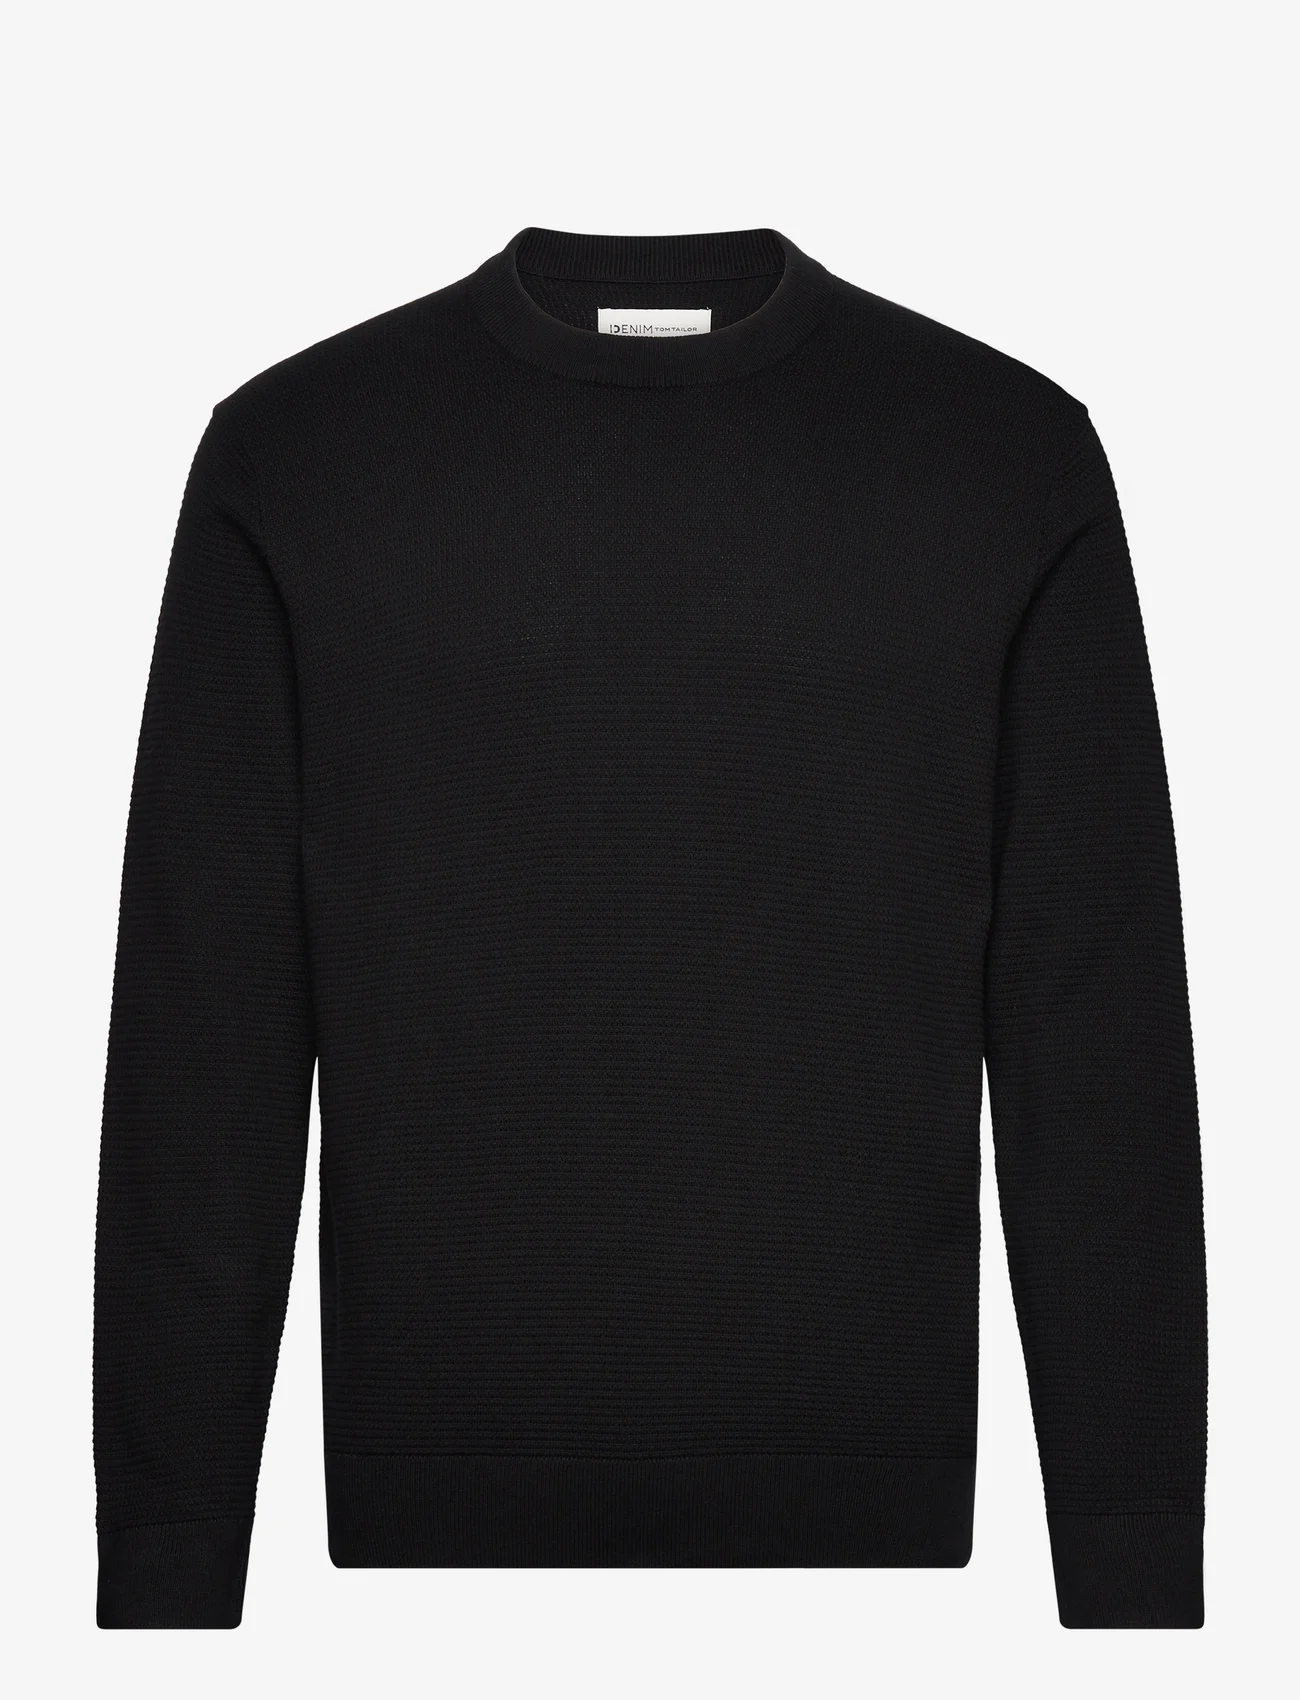 Tom Tailor - structured basic knit - knitted round necks - black - 0